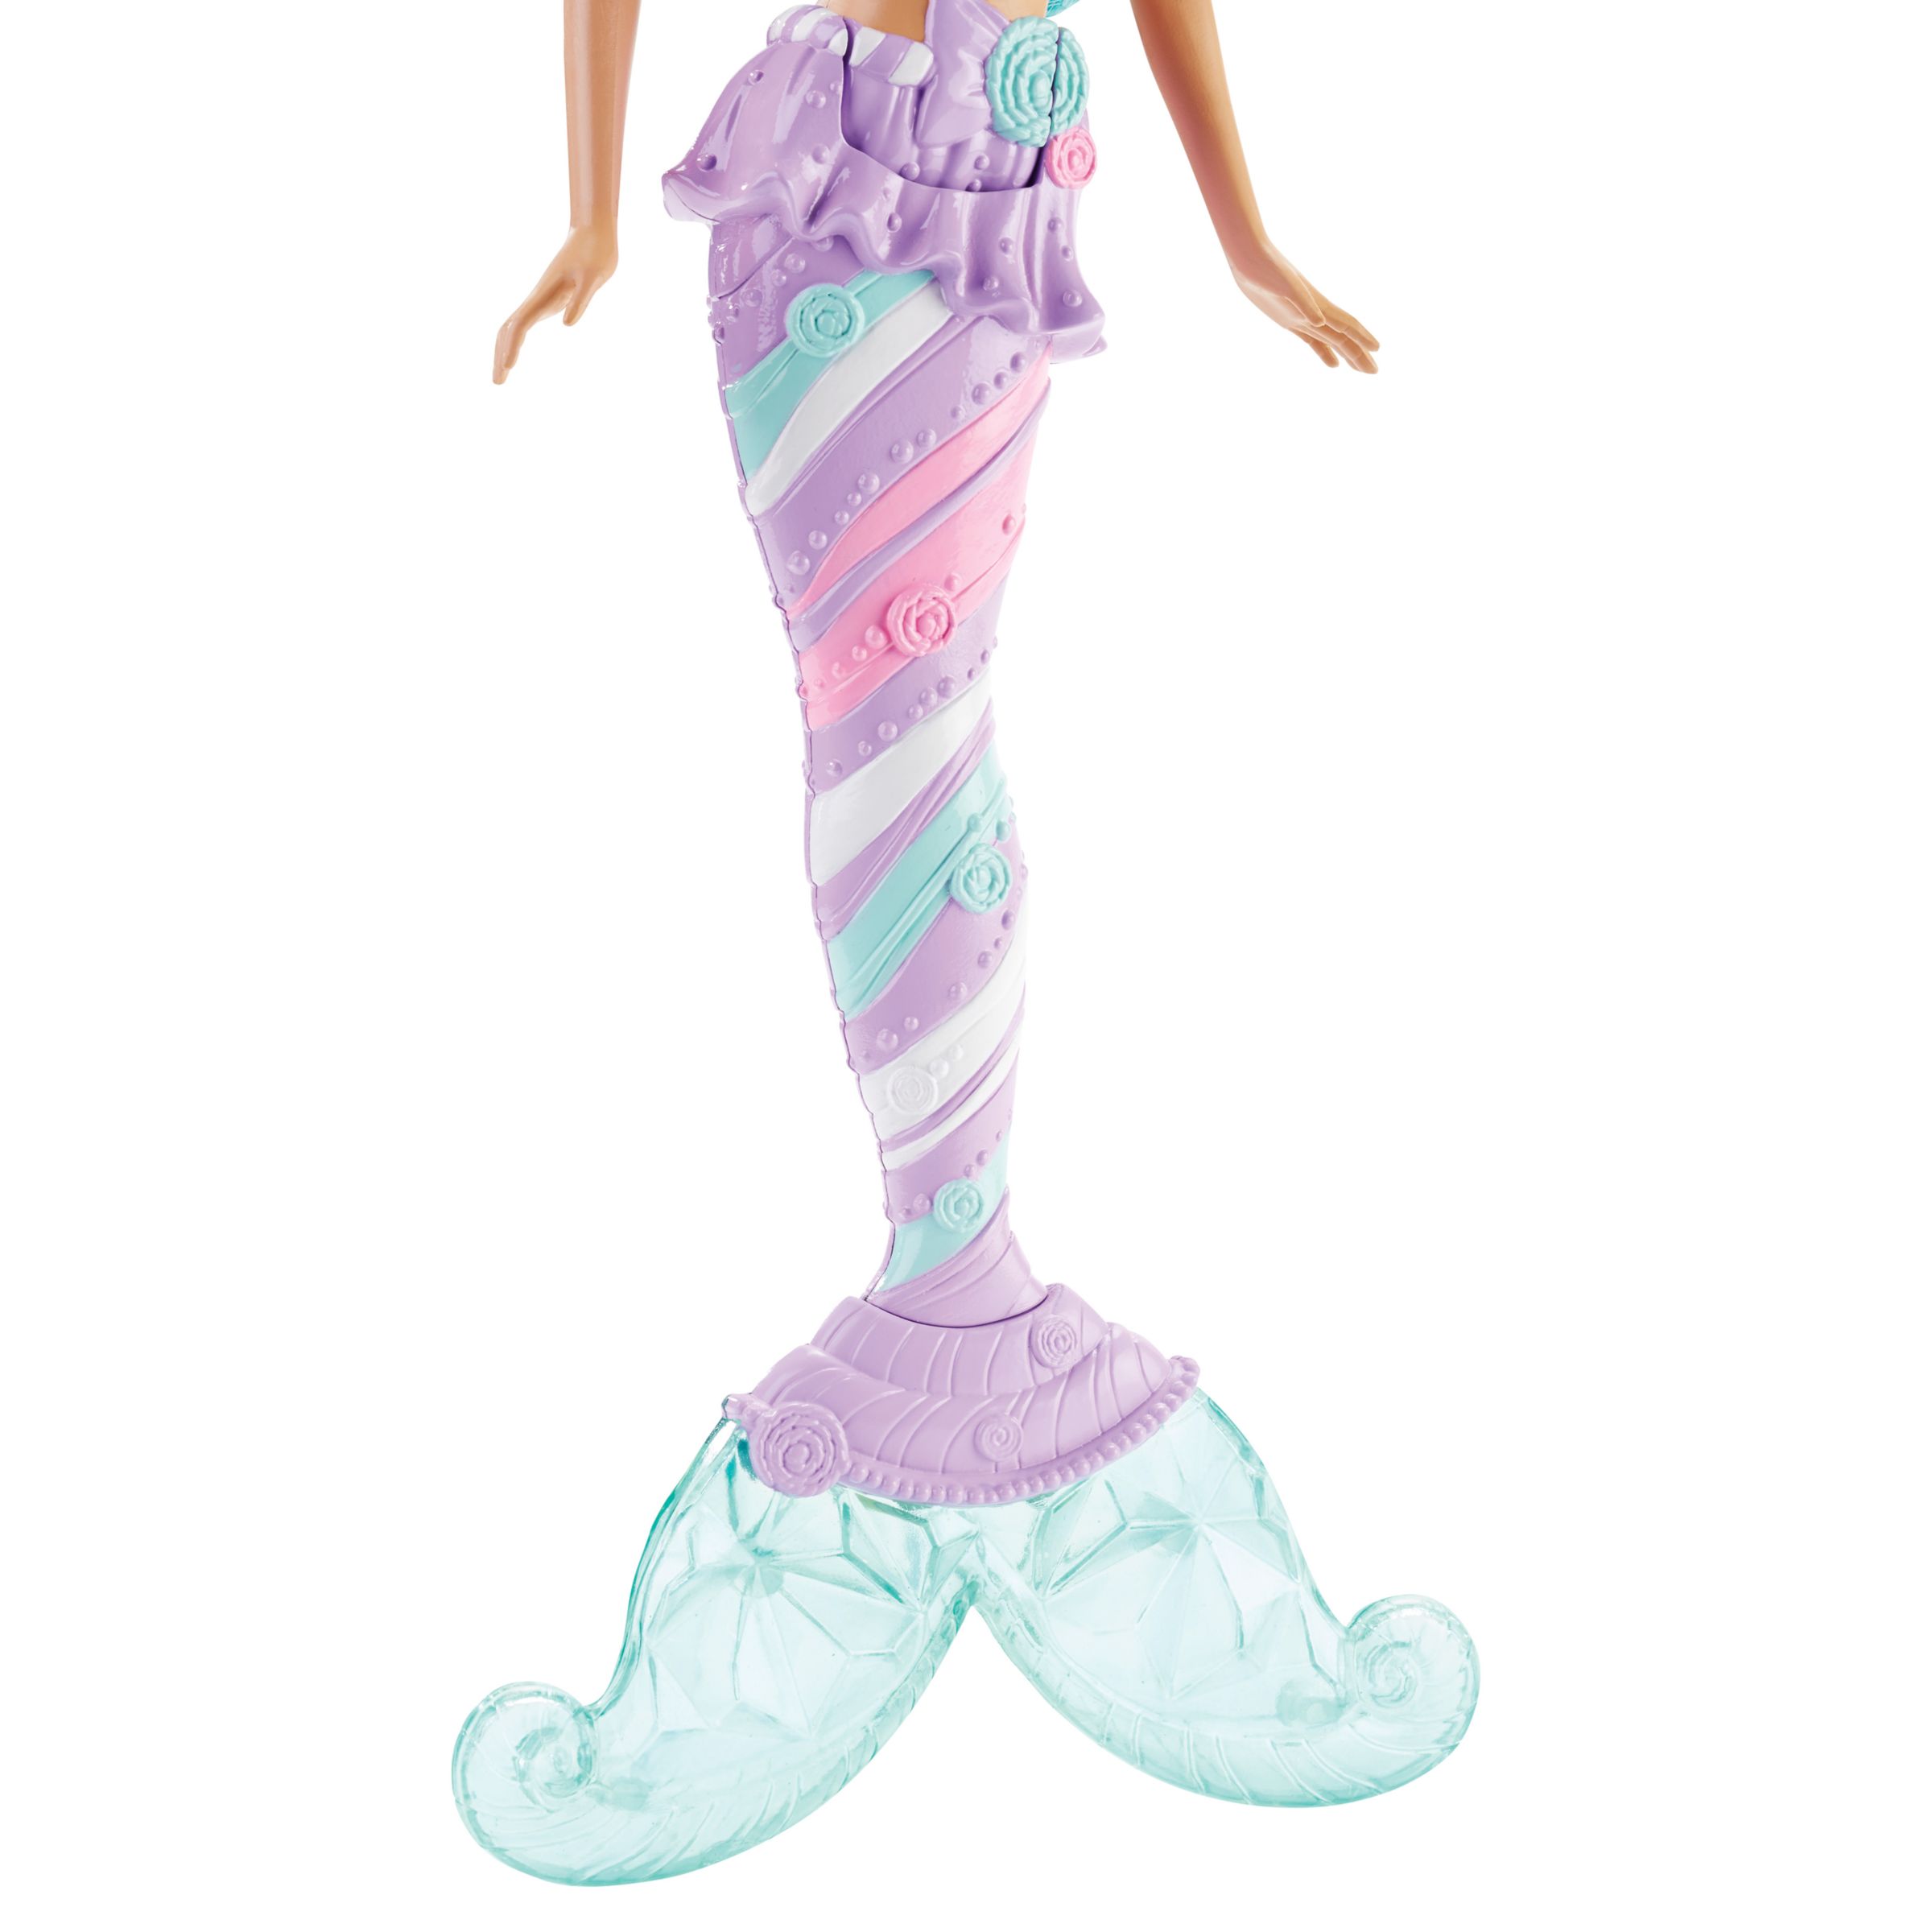 barbie mermaid candy fashion